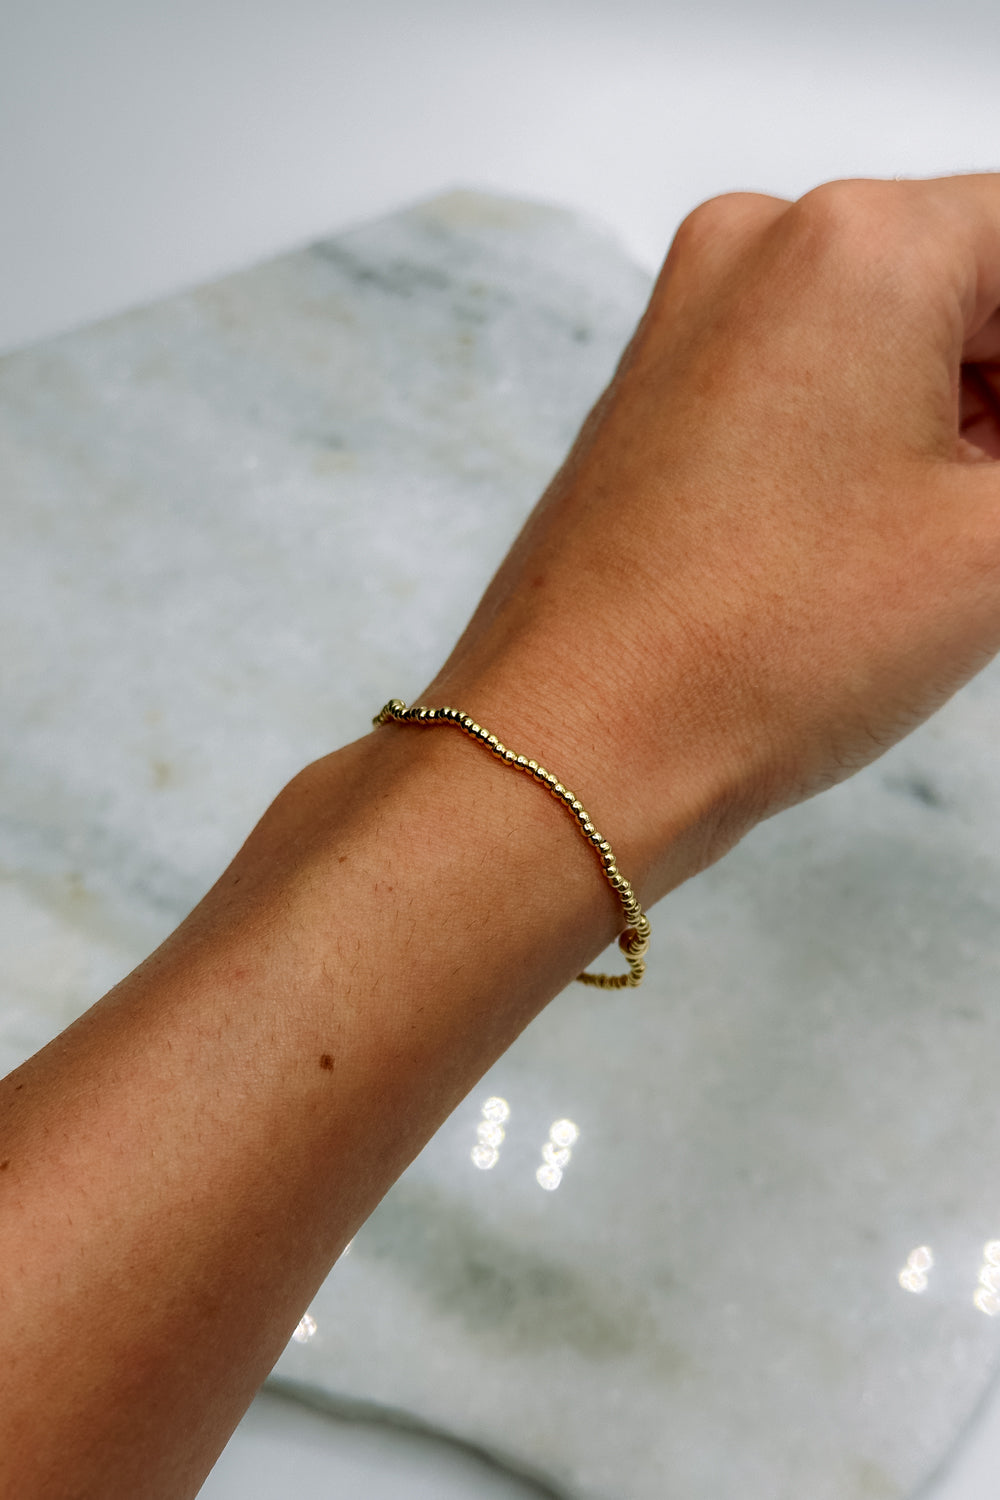 Image shows Jane Gold 2mm Beaded Water Resistant Bracelet on model's wrist.